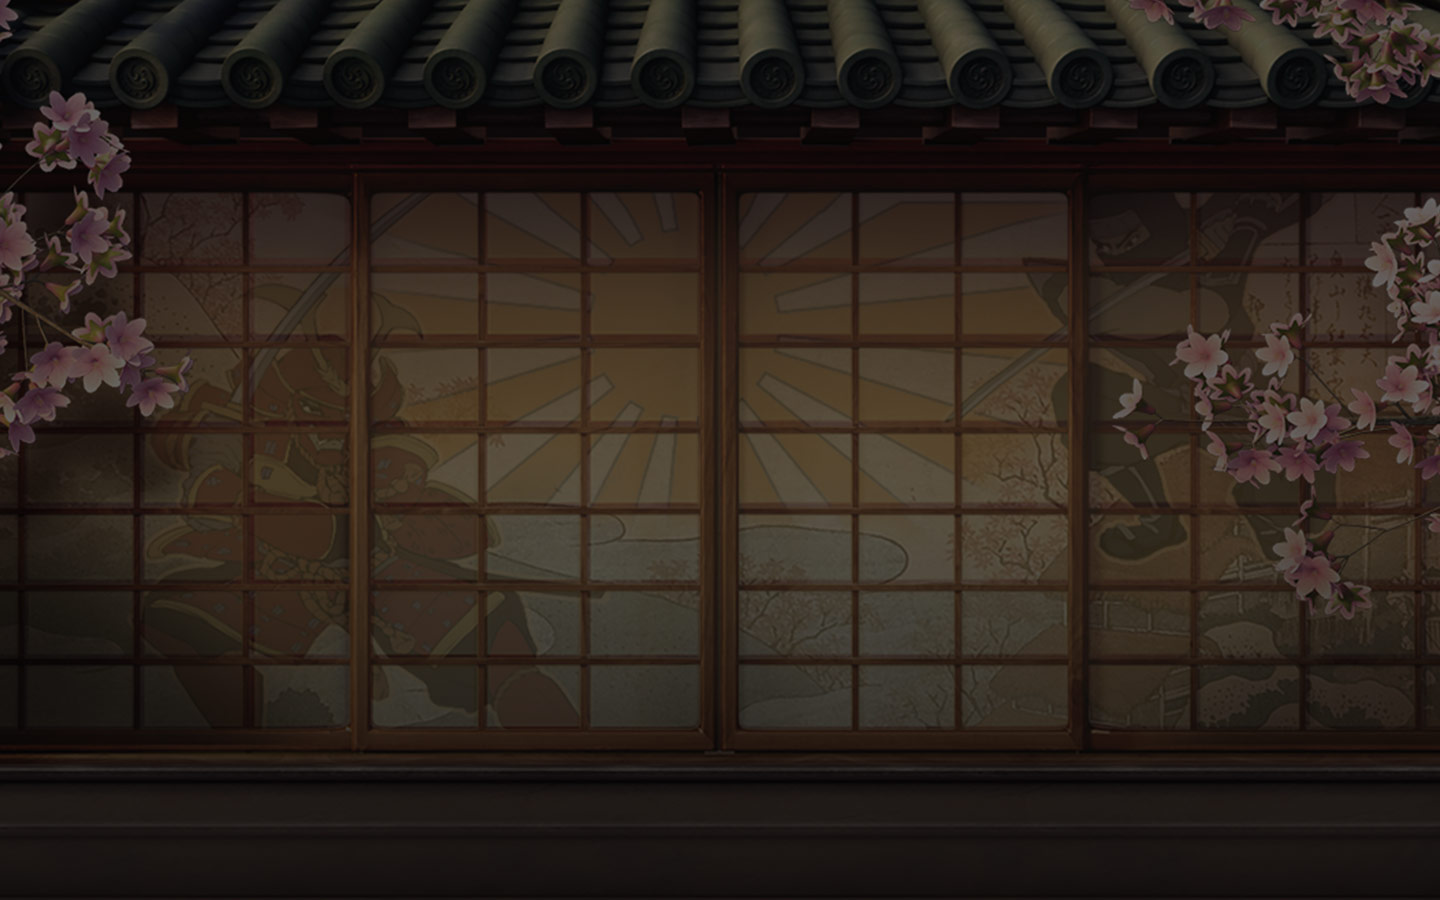 Ninja Vs Samurai Game Play Now At Sportsbet With Bitcoin